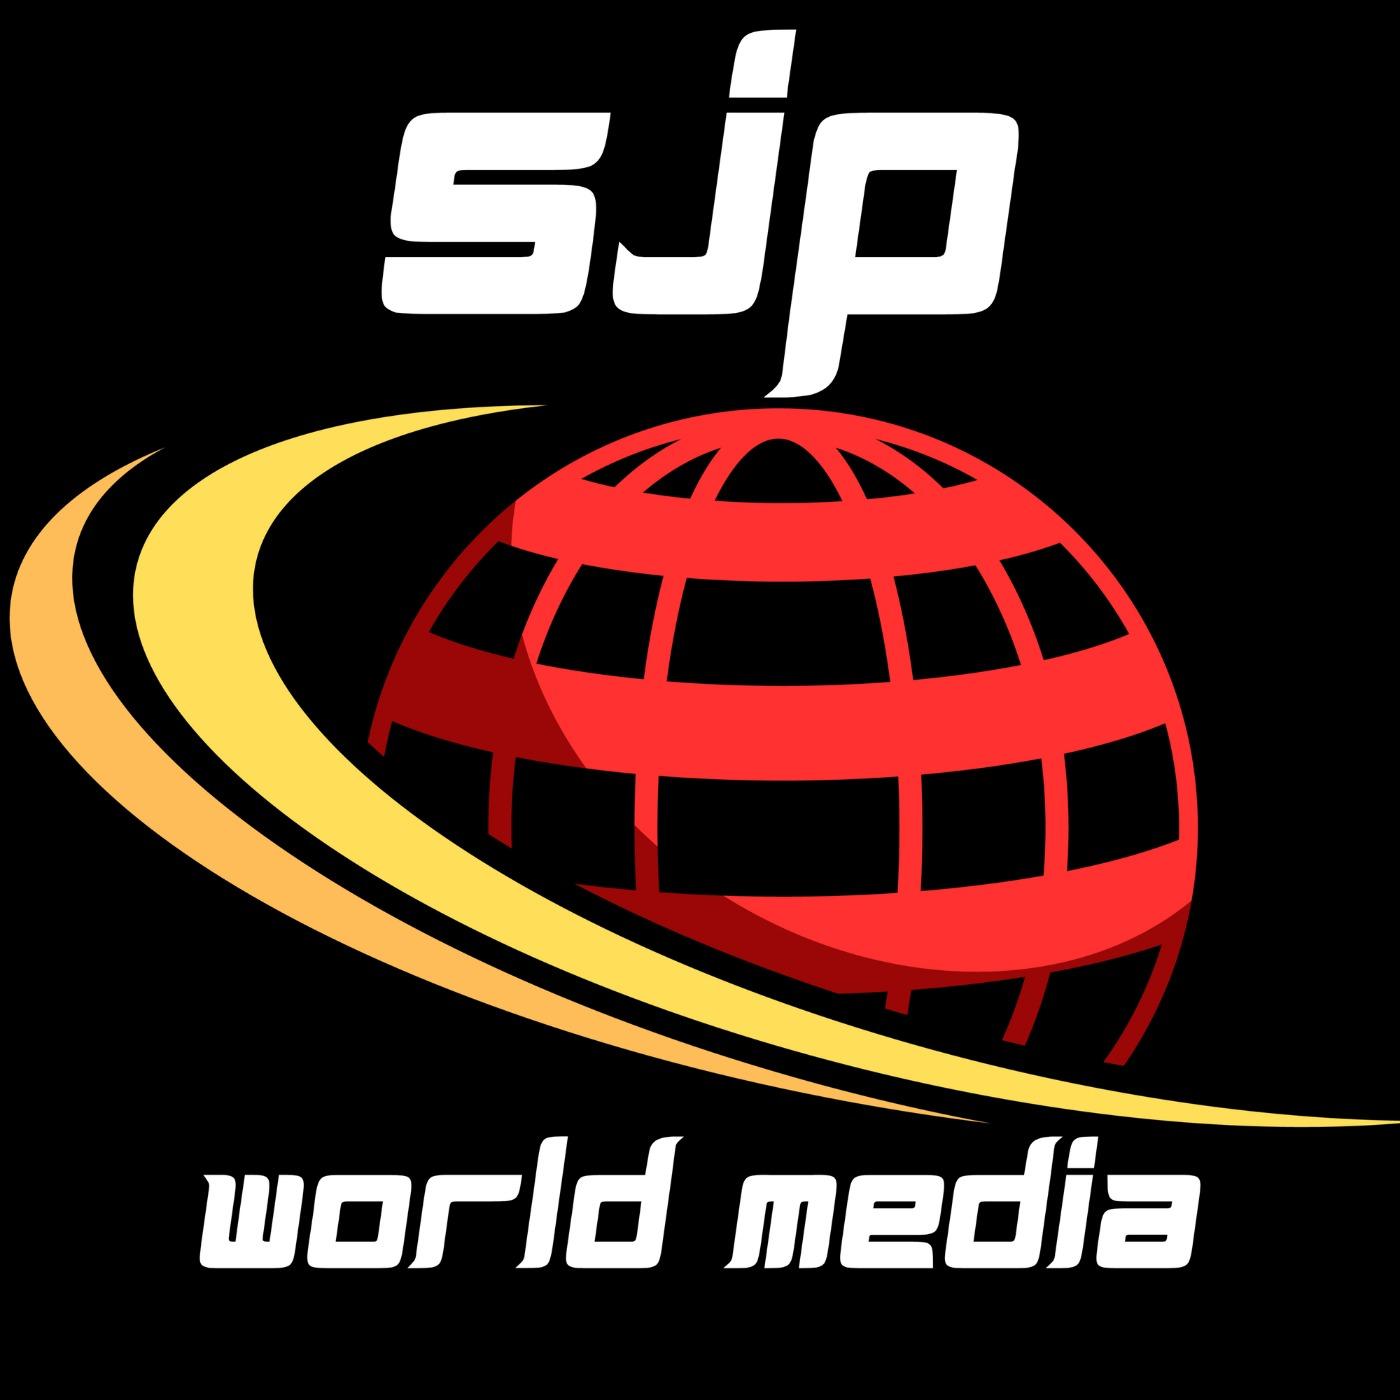 SJP WORLD MEDIA